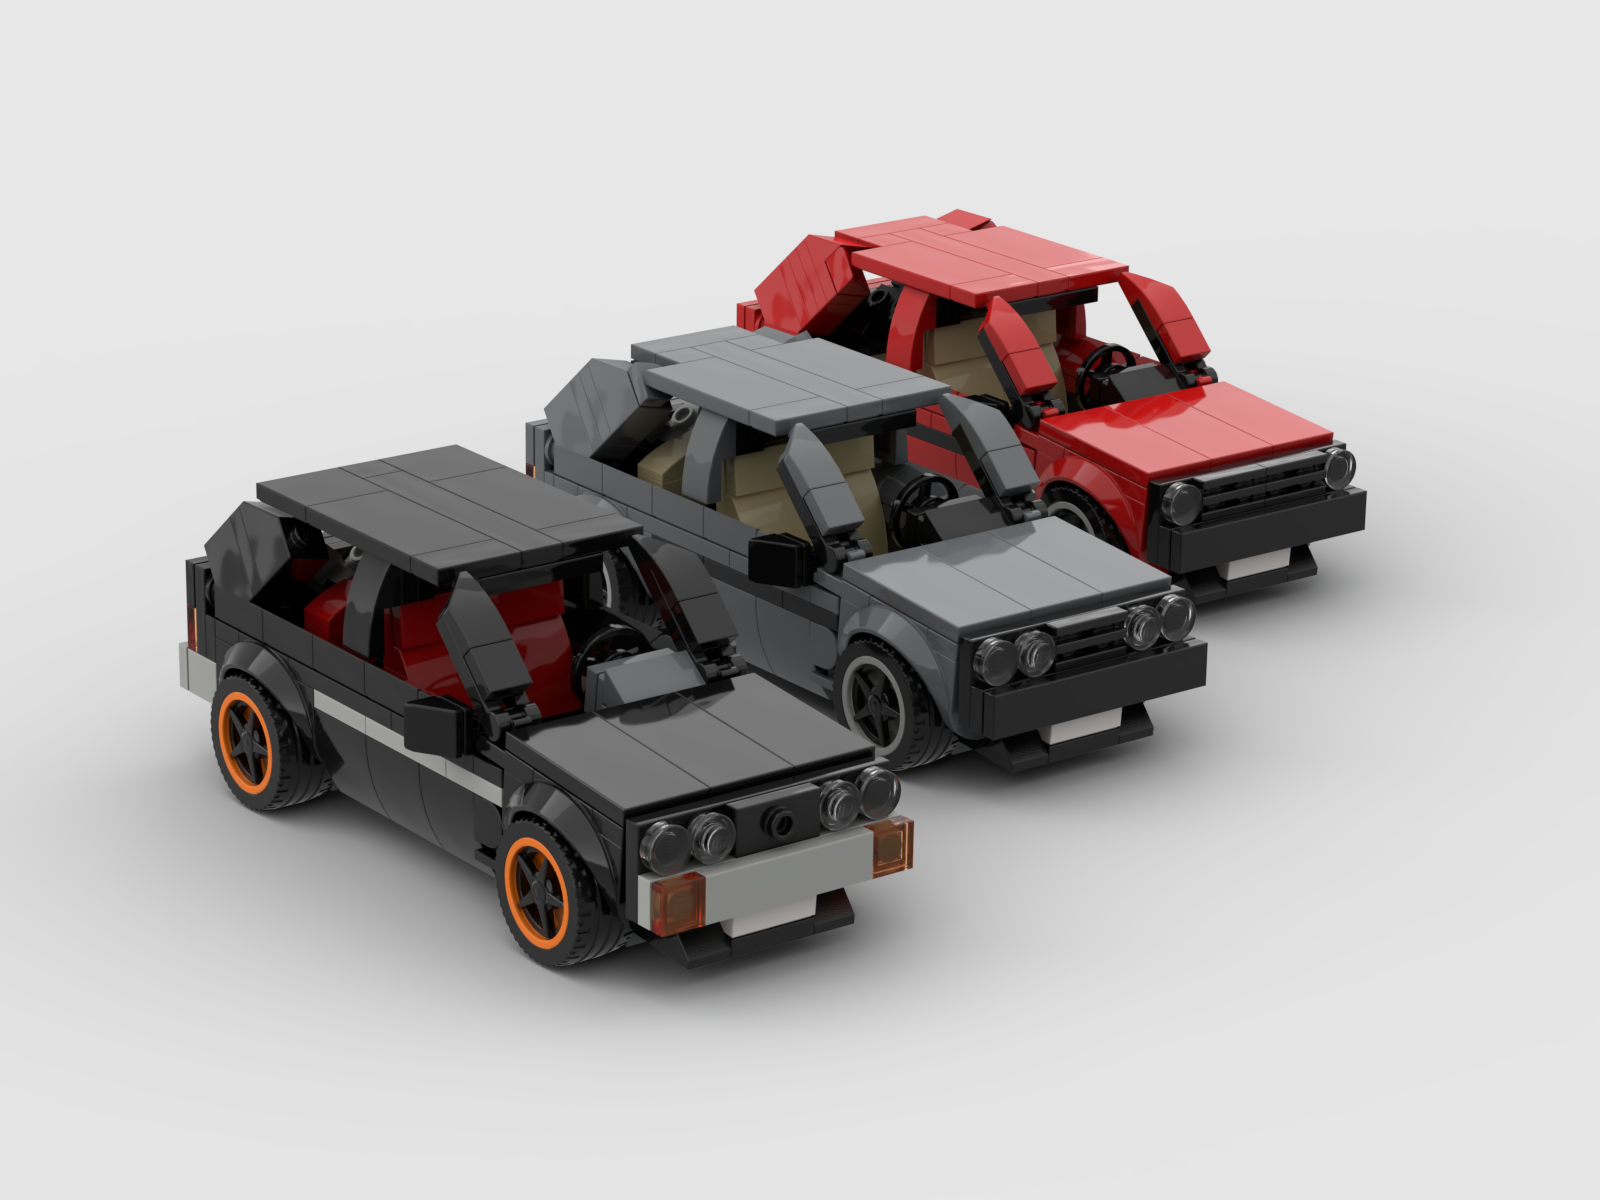 3 Lego models of a Volkswagen Golf 1